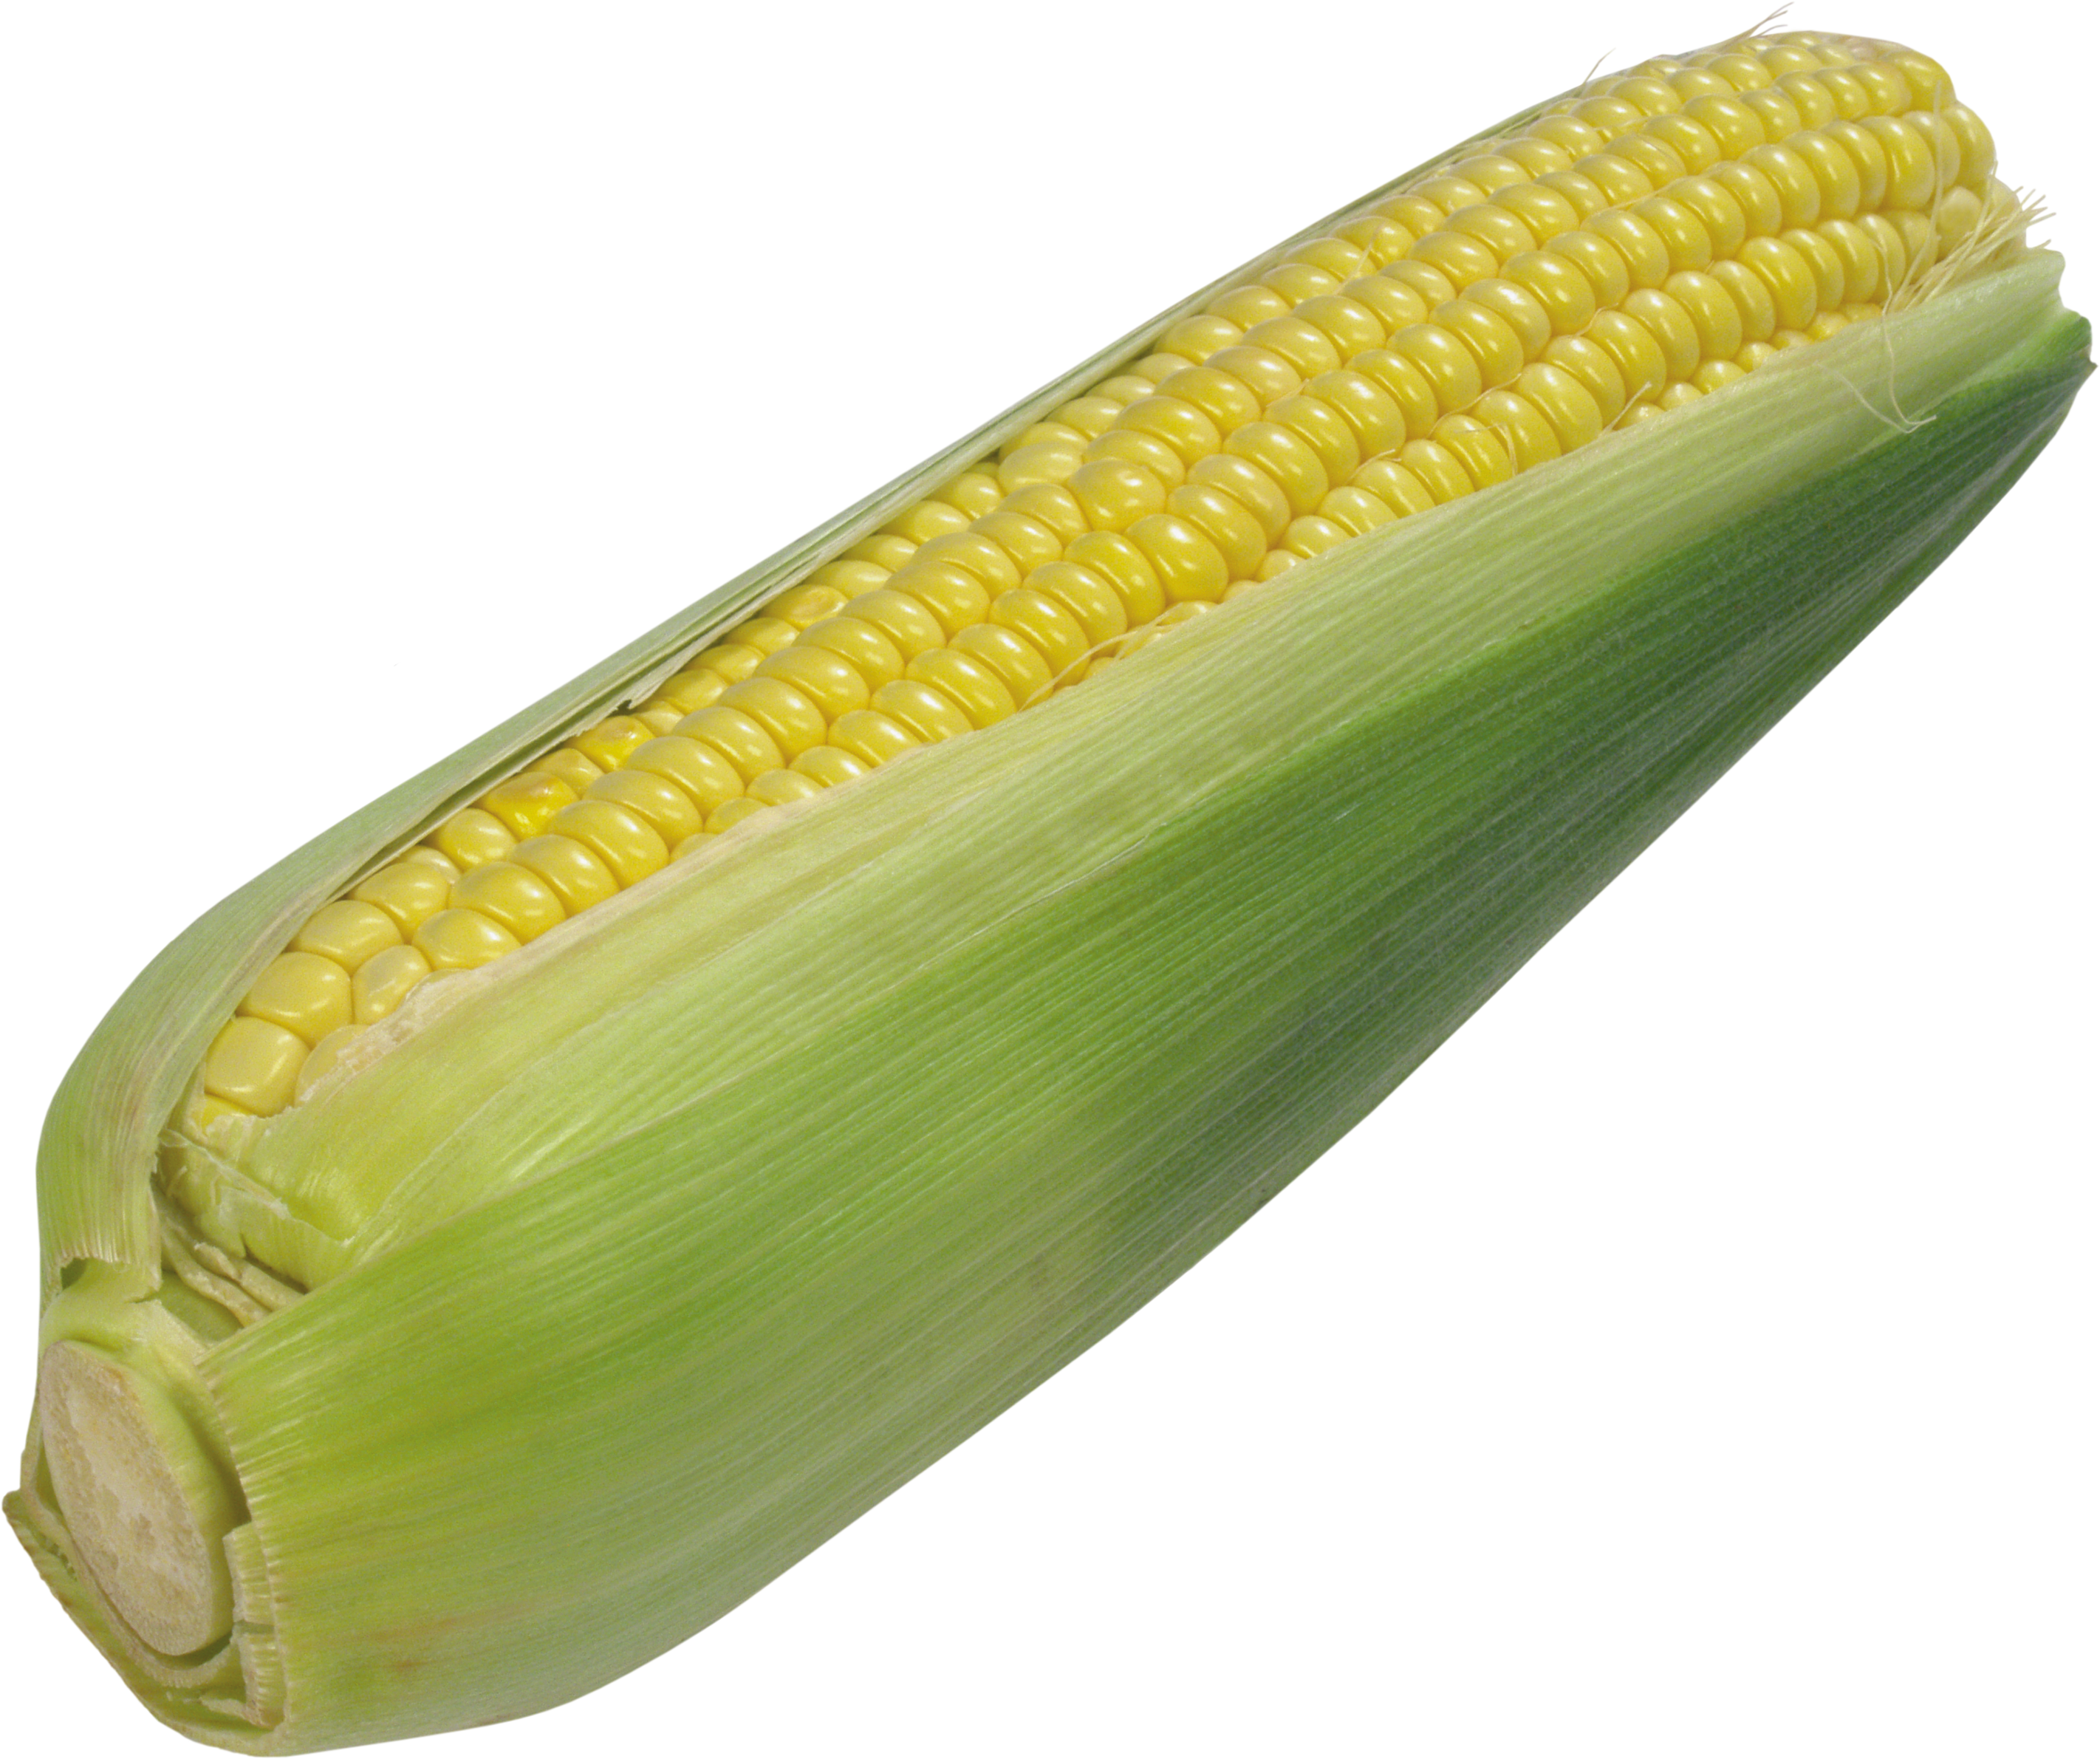 Corn cooked corn